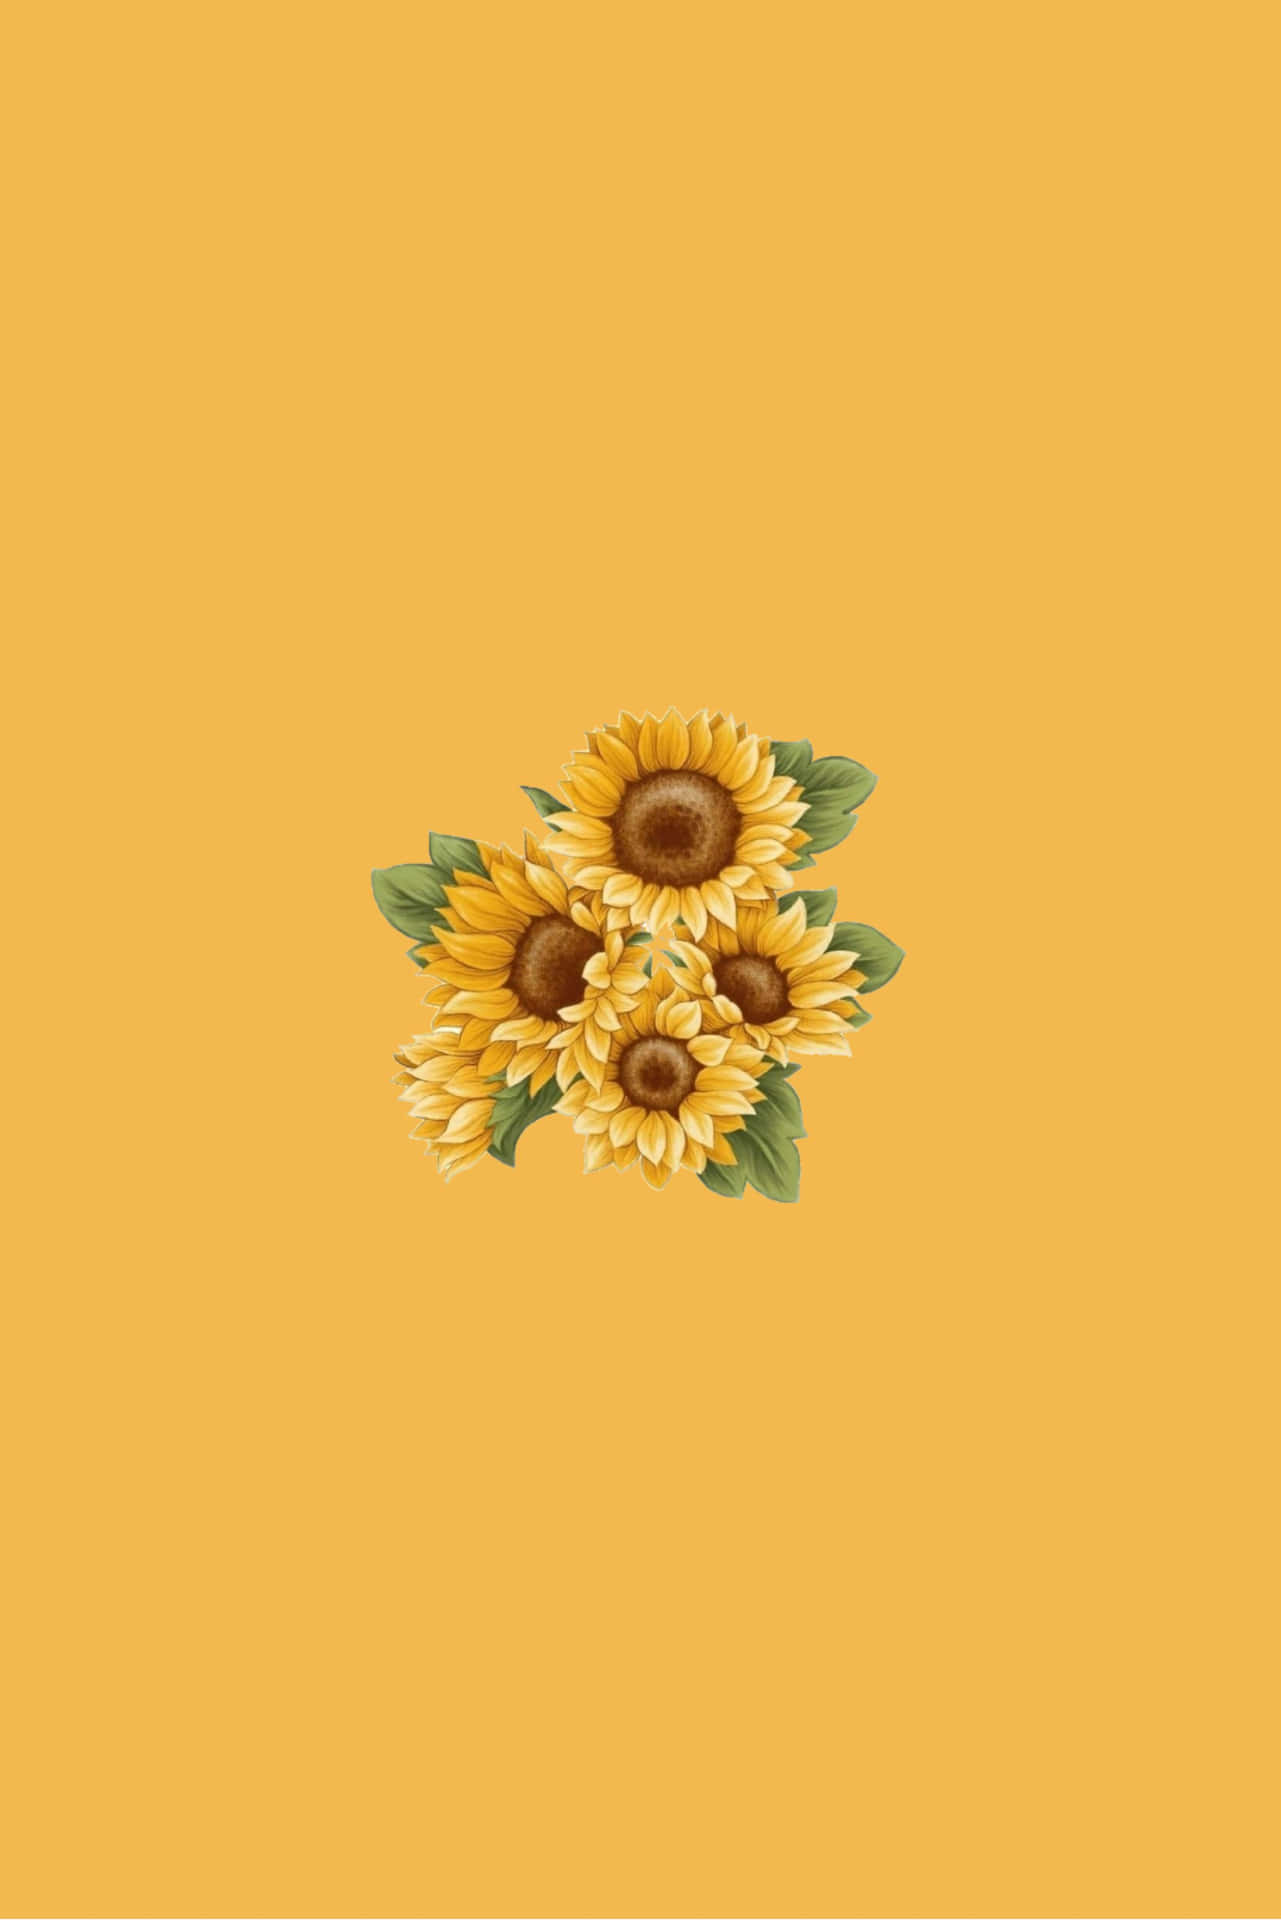 A yellow sunflower basking in the warm sunlight Wallpaper